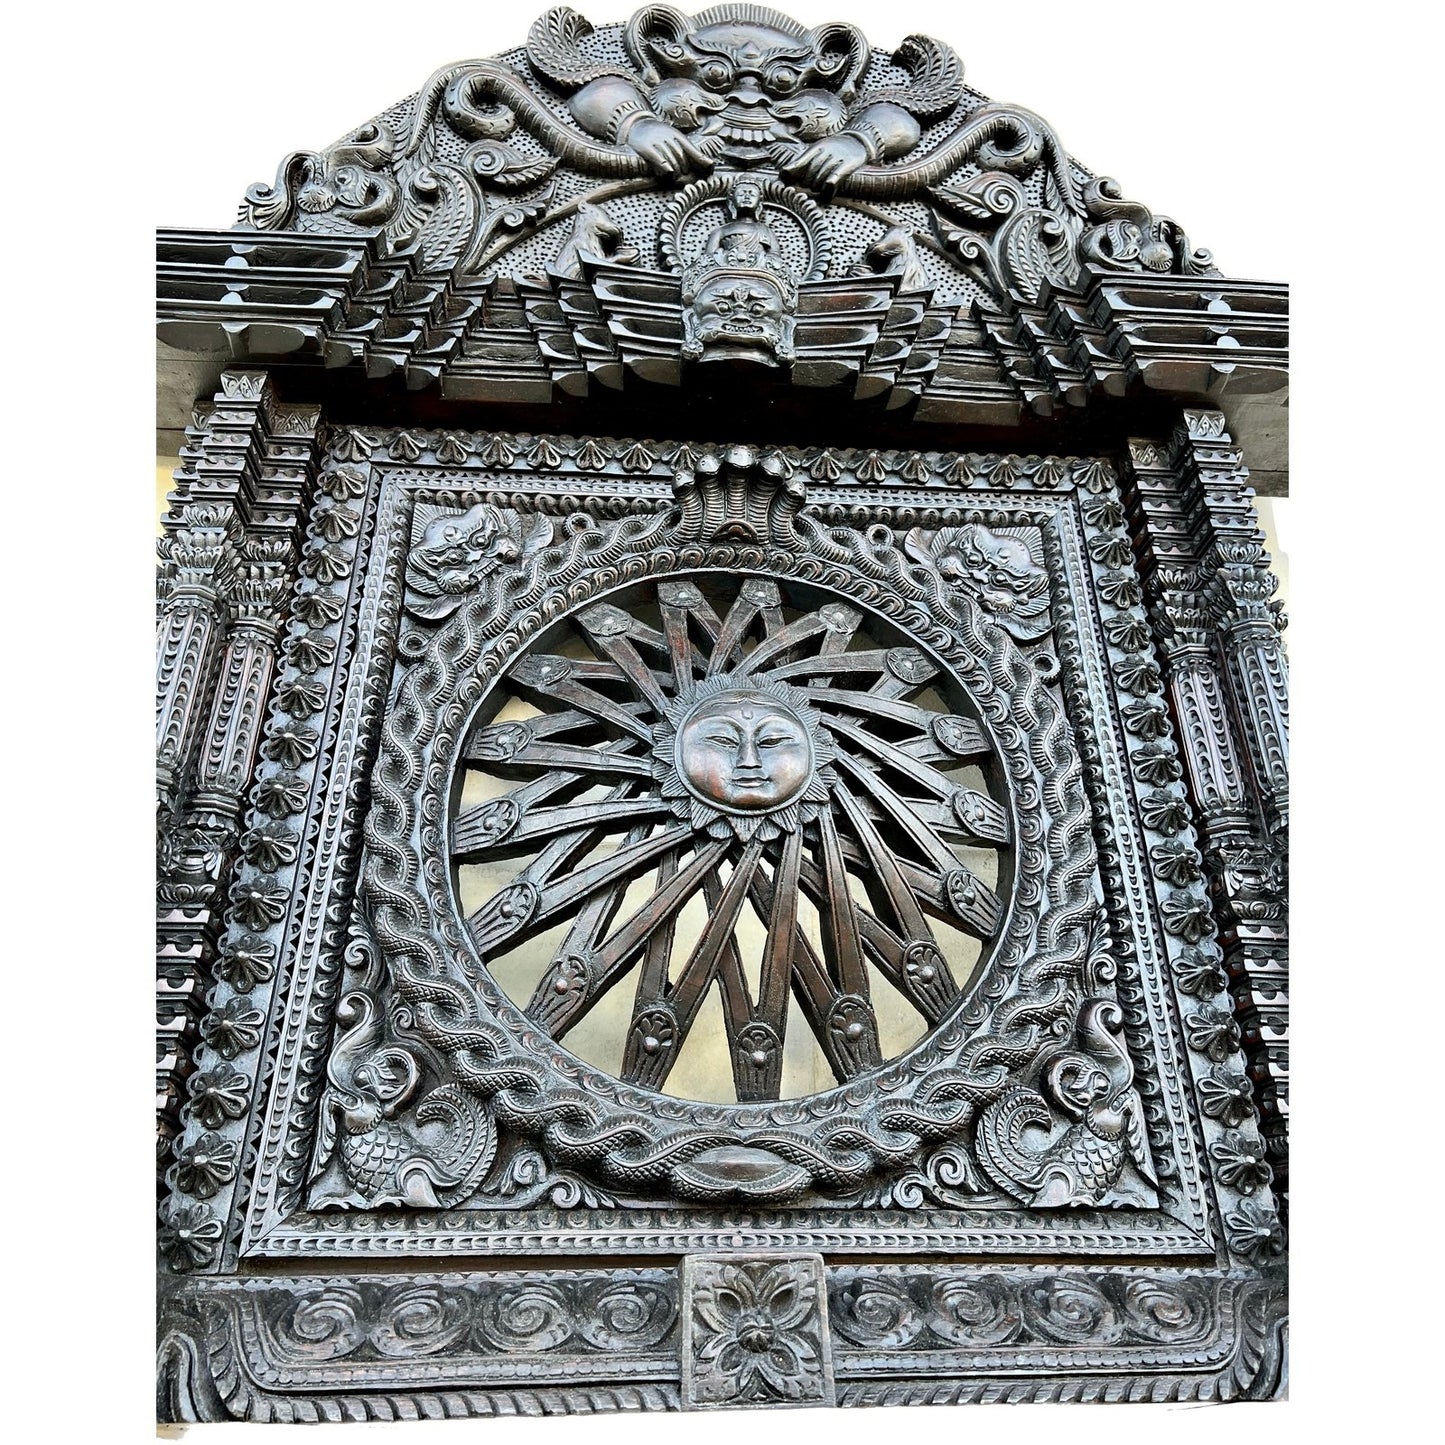 Surya Mukhi Aakhi Jhyal/ Ankhijhyal Wood Carvings Samaghri